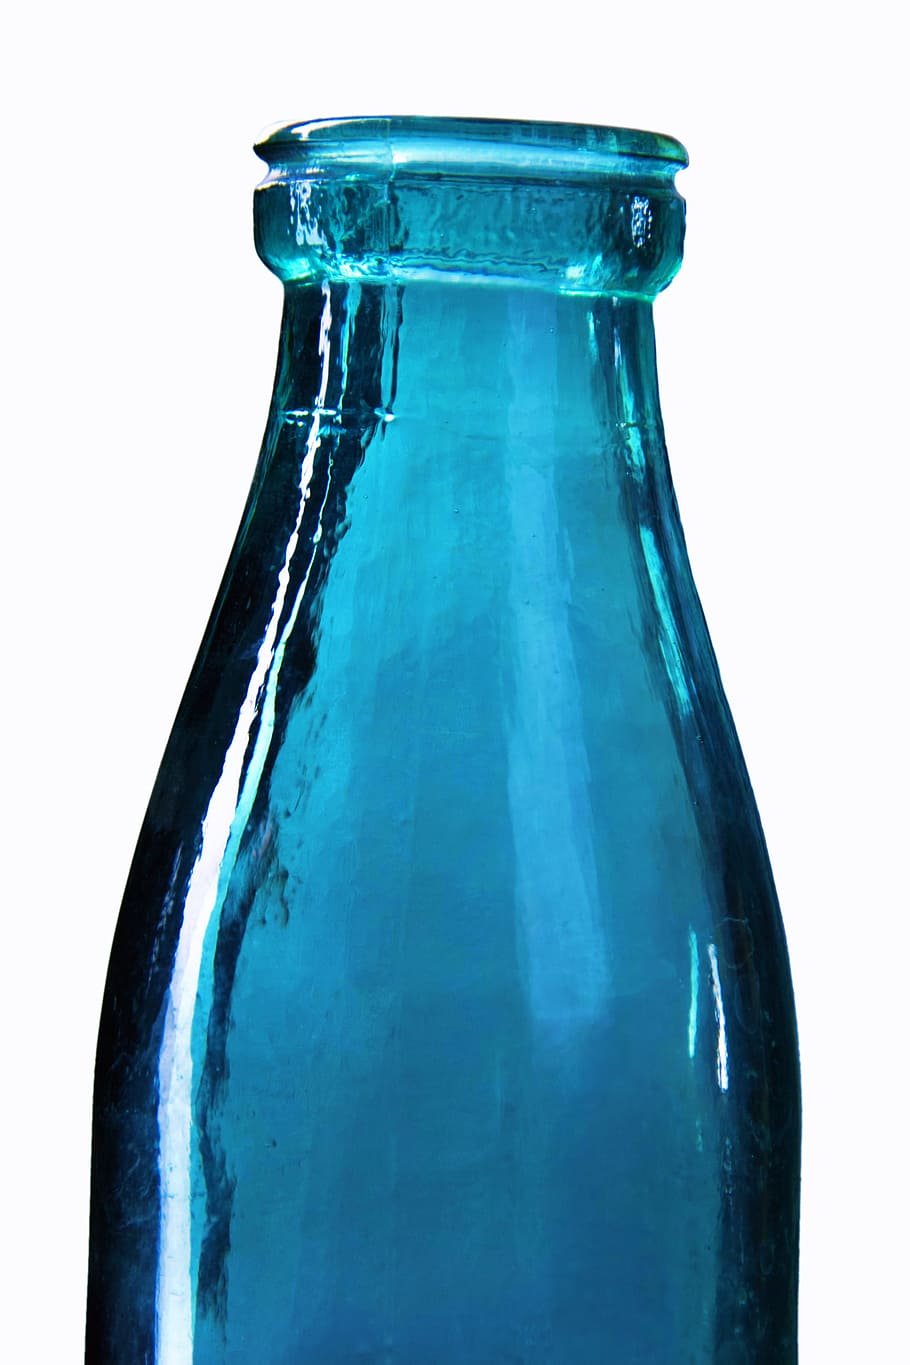 glass, blue, soda, closeup, isolated, wet, bottleneck, clear, nobody, vibrant